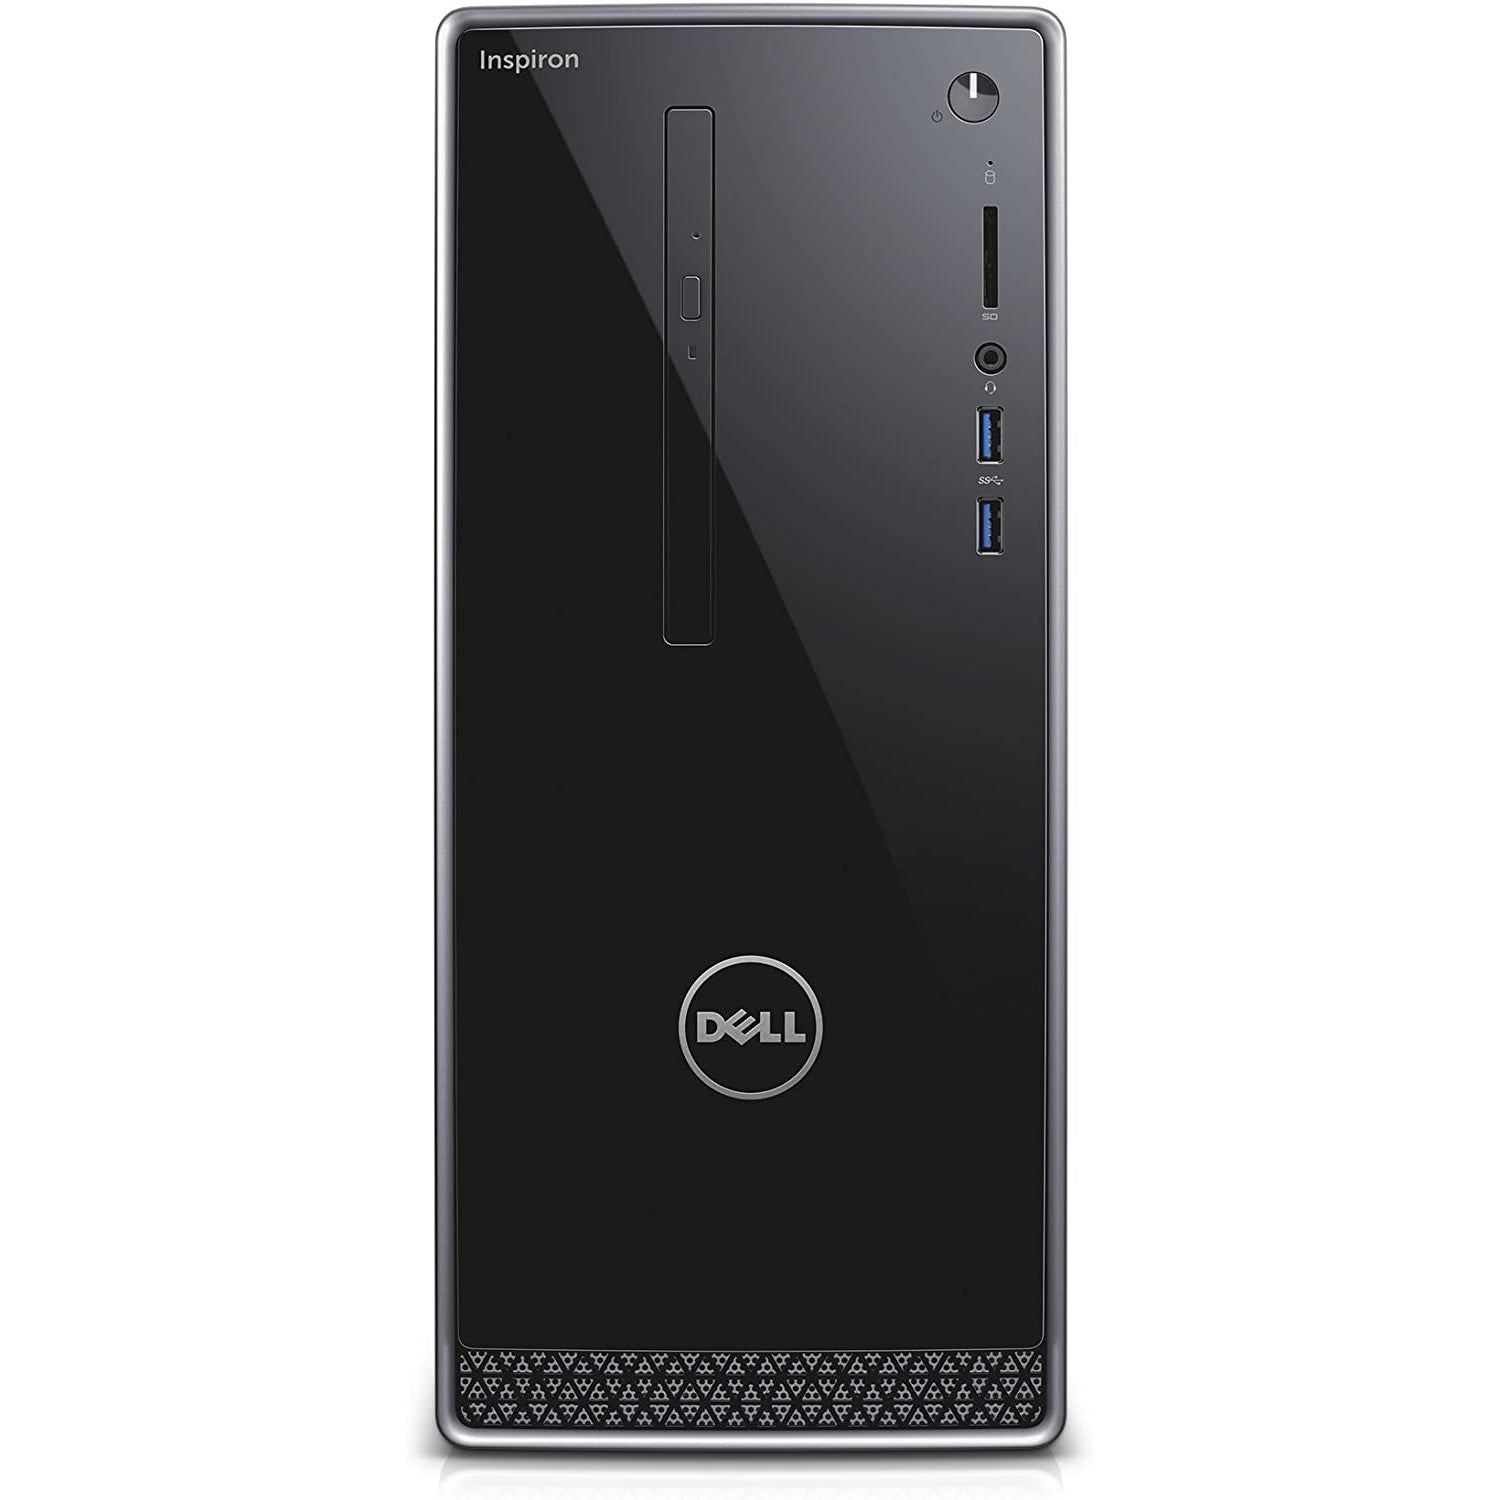 Dell Inspiron 3650 Tower Desktop Computer, Intel Core i3 6100, 8GB Ram, 500GB HDD, Windows 10, Black